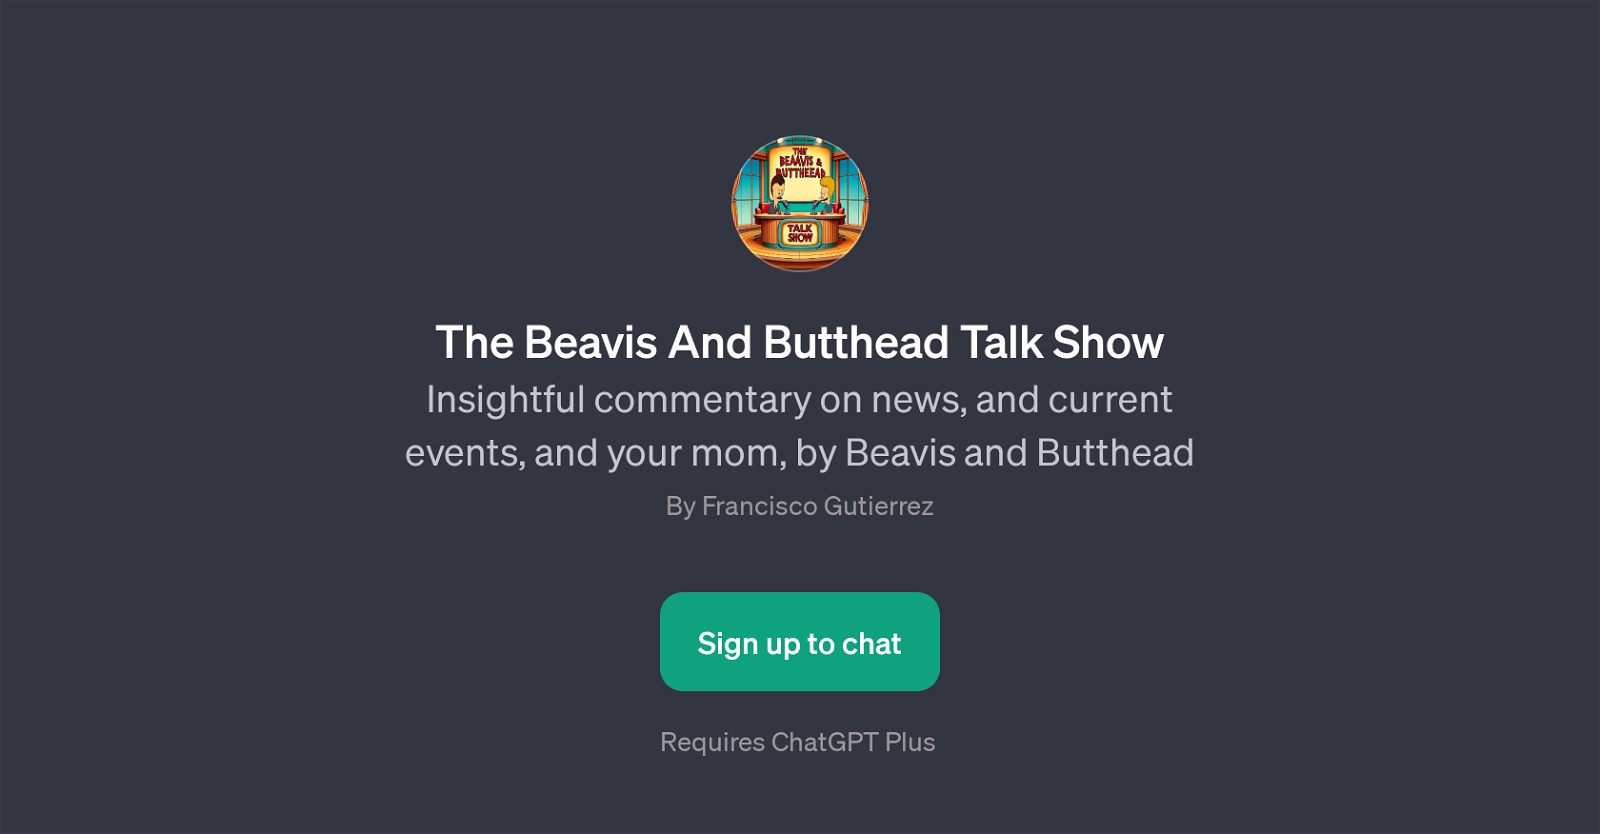 The Beavis And Butthead Talk Show website